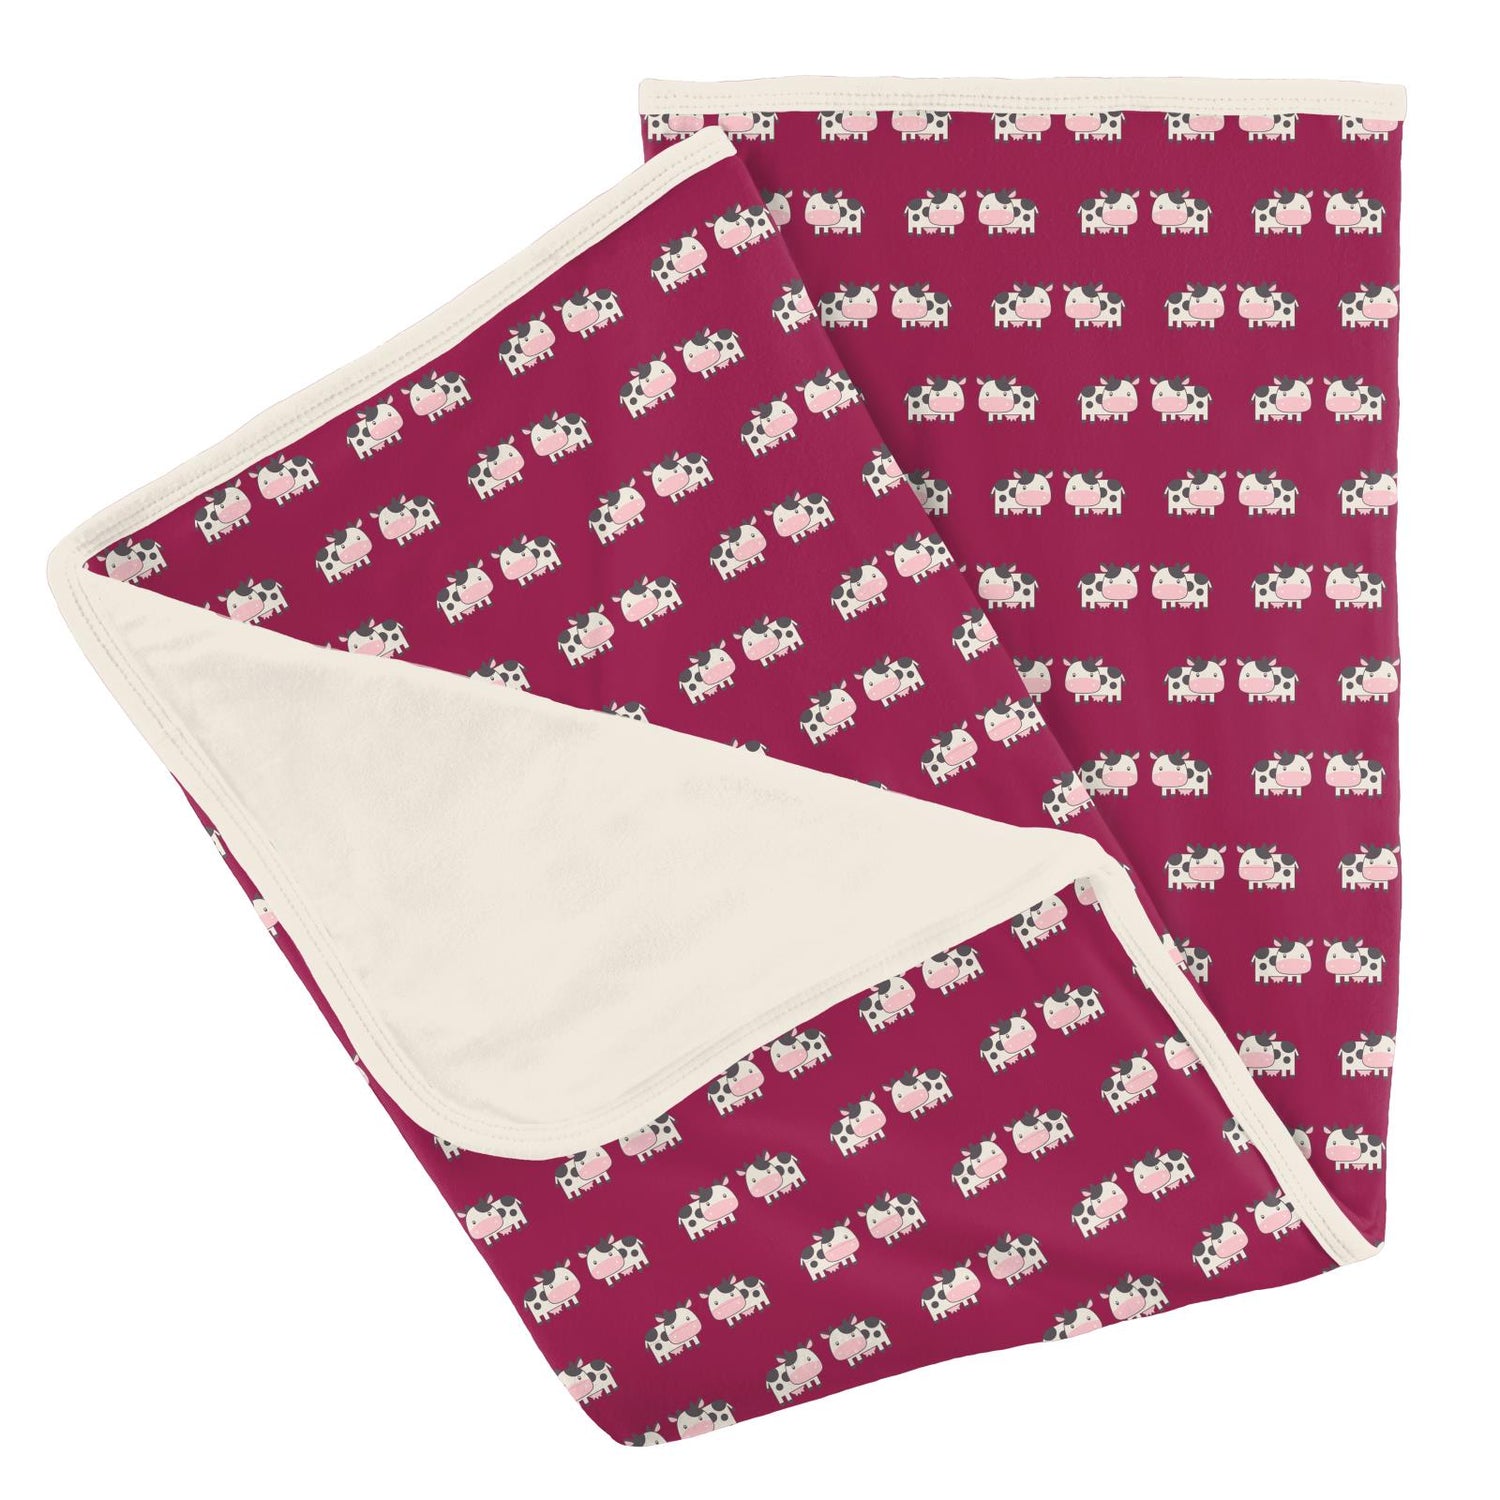 Print Stroller Blanket in Berry Cow